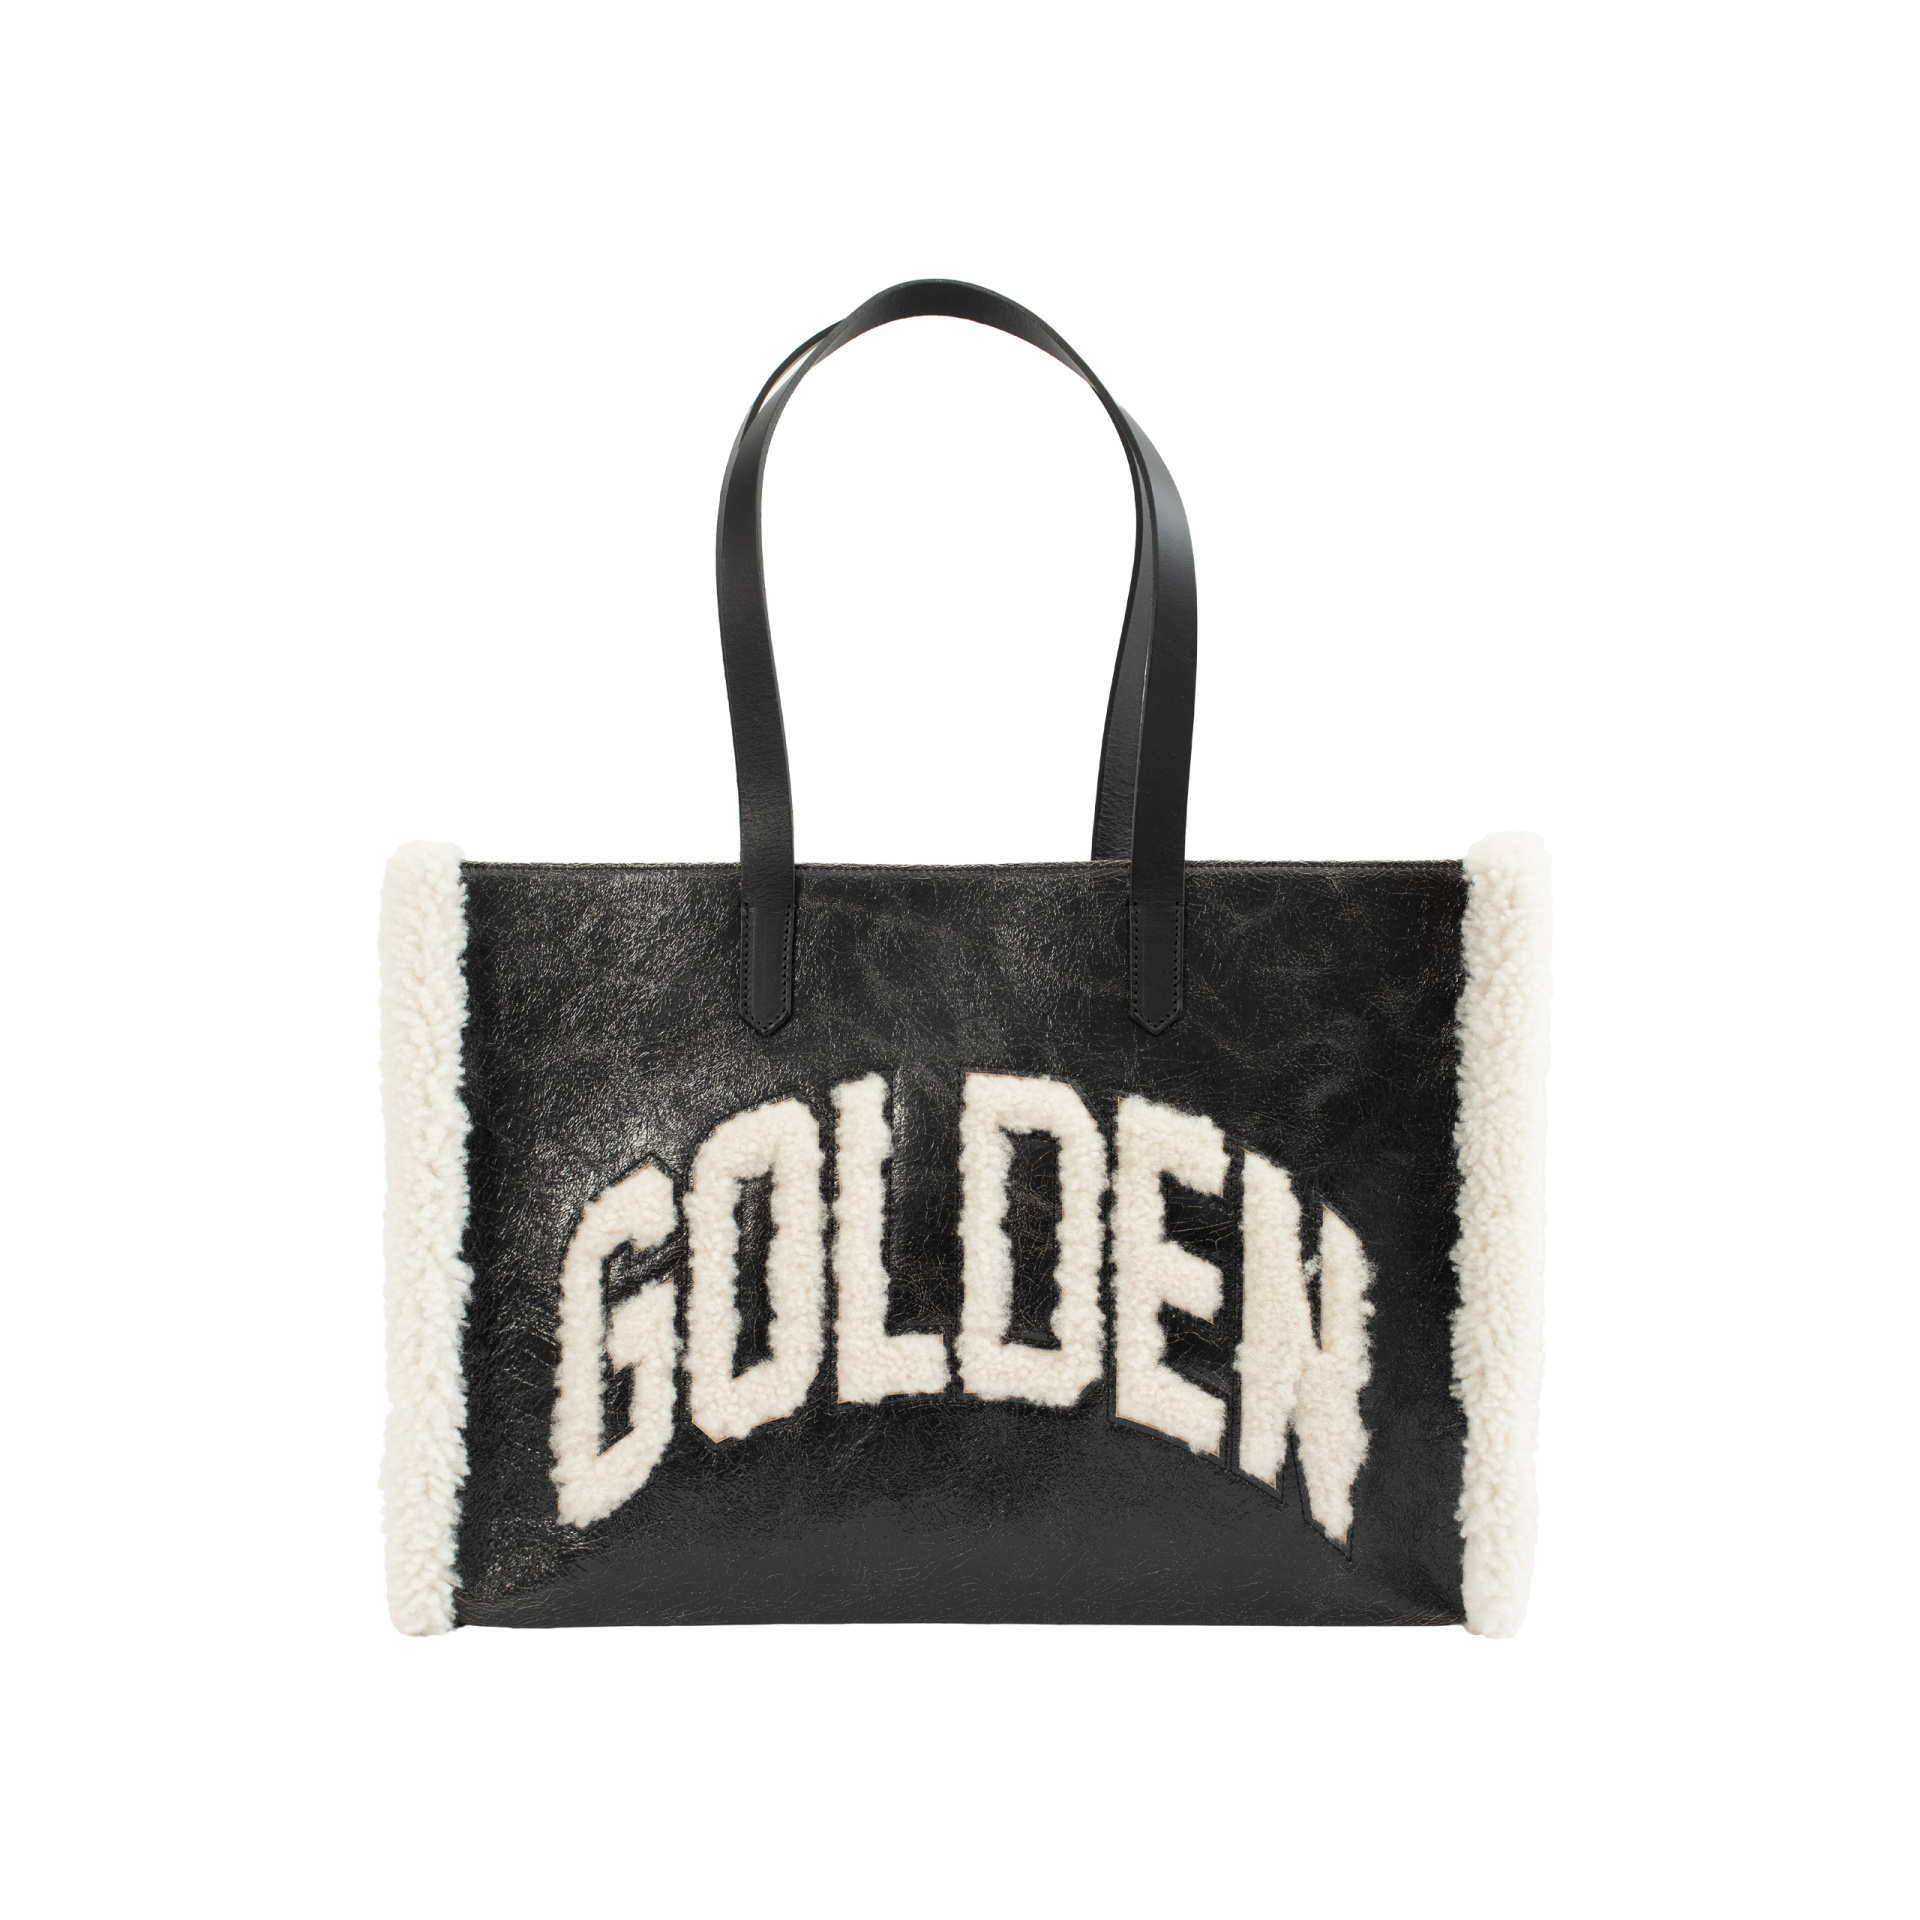 Golden Goose Bag